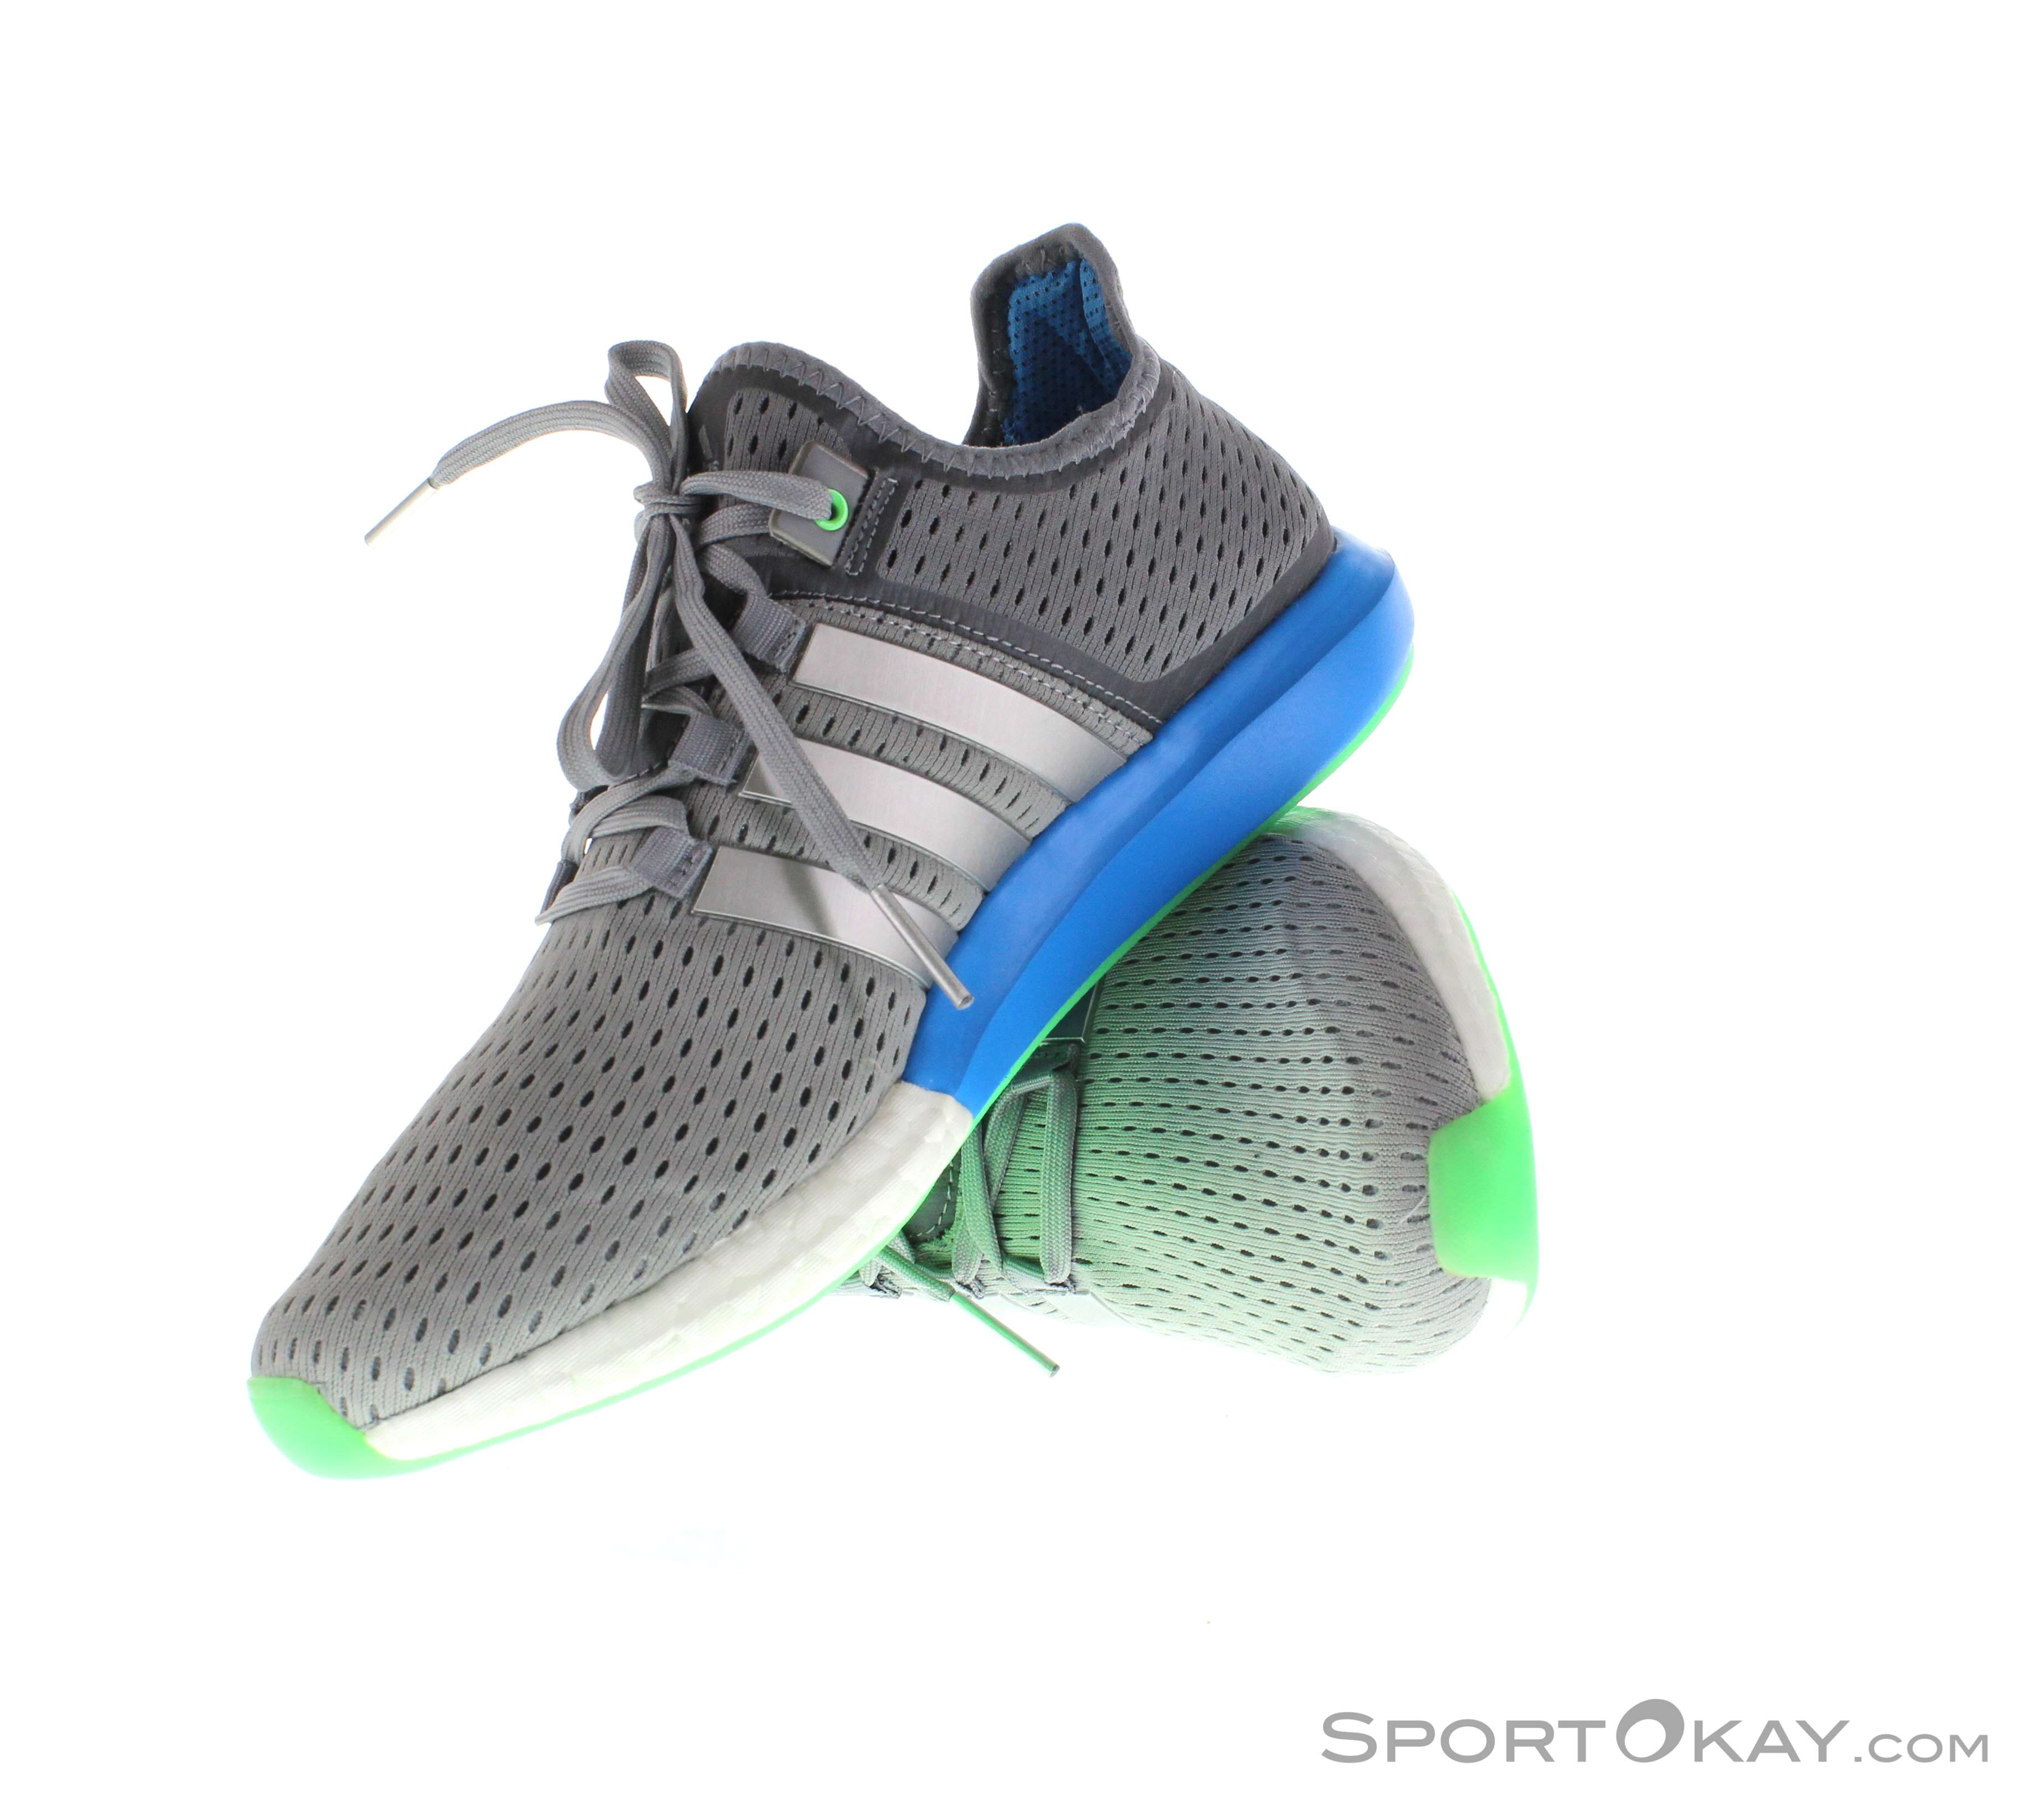 Adidas CC Gazelle Boost Mens Running Shoes - Shoes - Running Shoes - Running - All